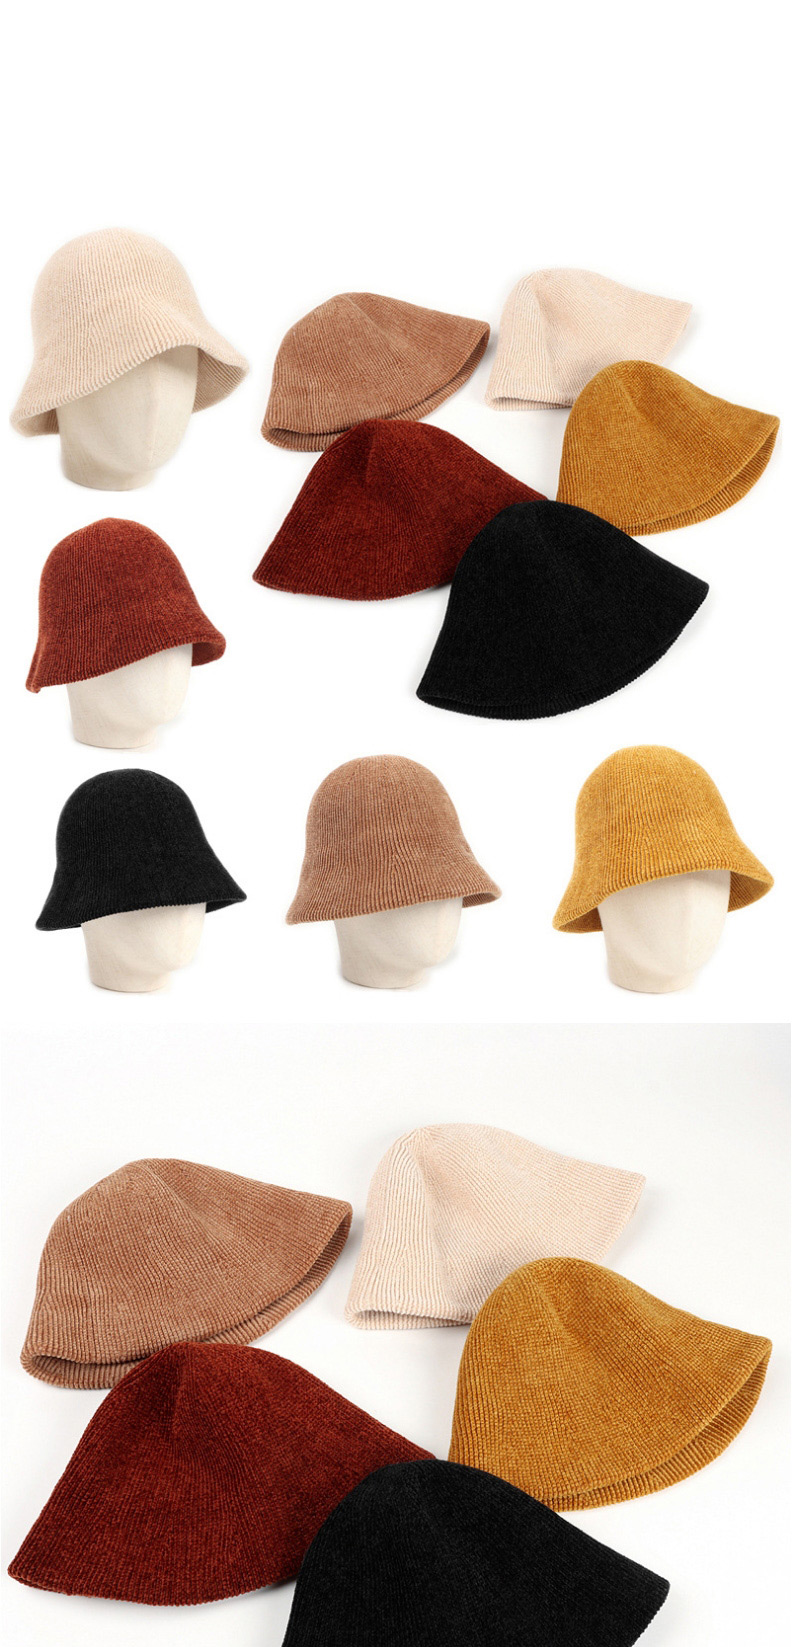 Fashion Turmeric Corduroy Dome Knitted Fisherman Hat,Sun Hats